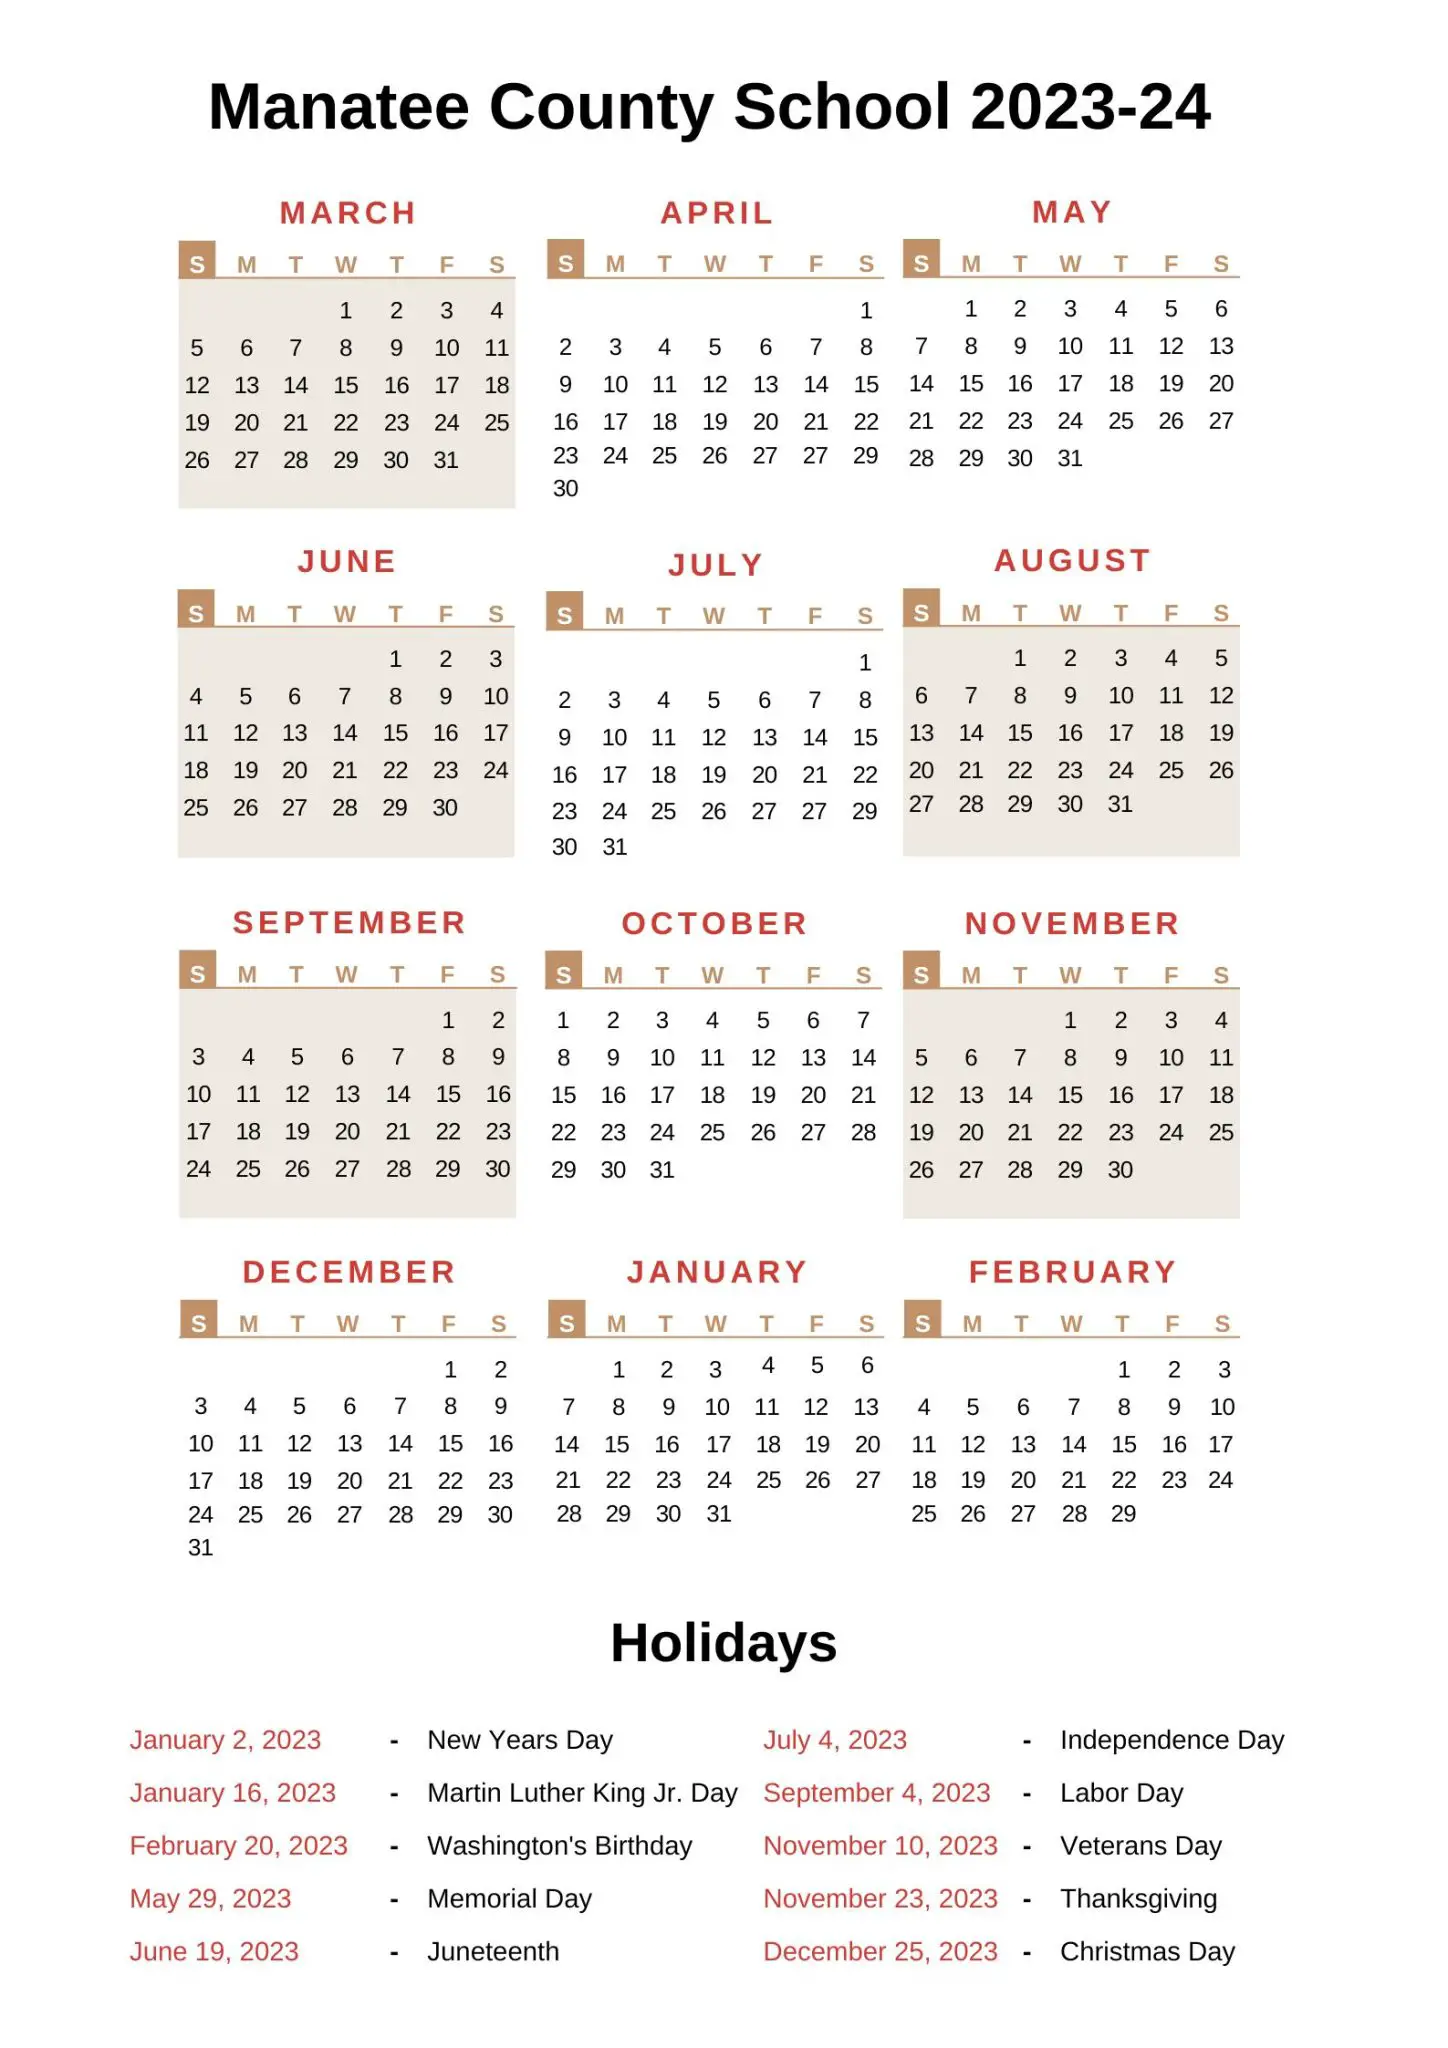 Manatee County School Calendar with Holidays 2022 2023